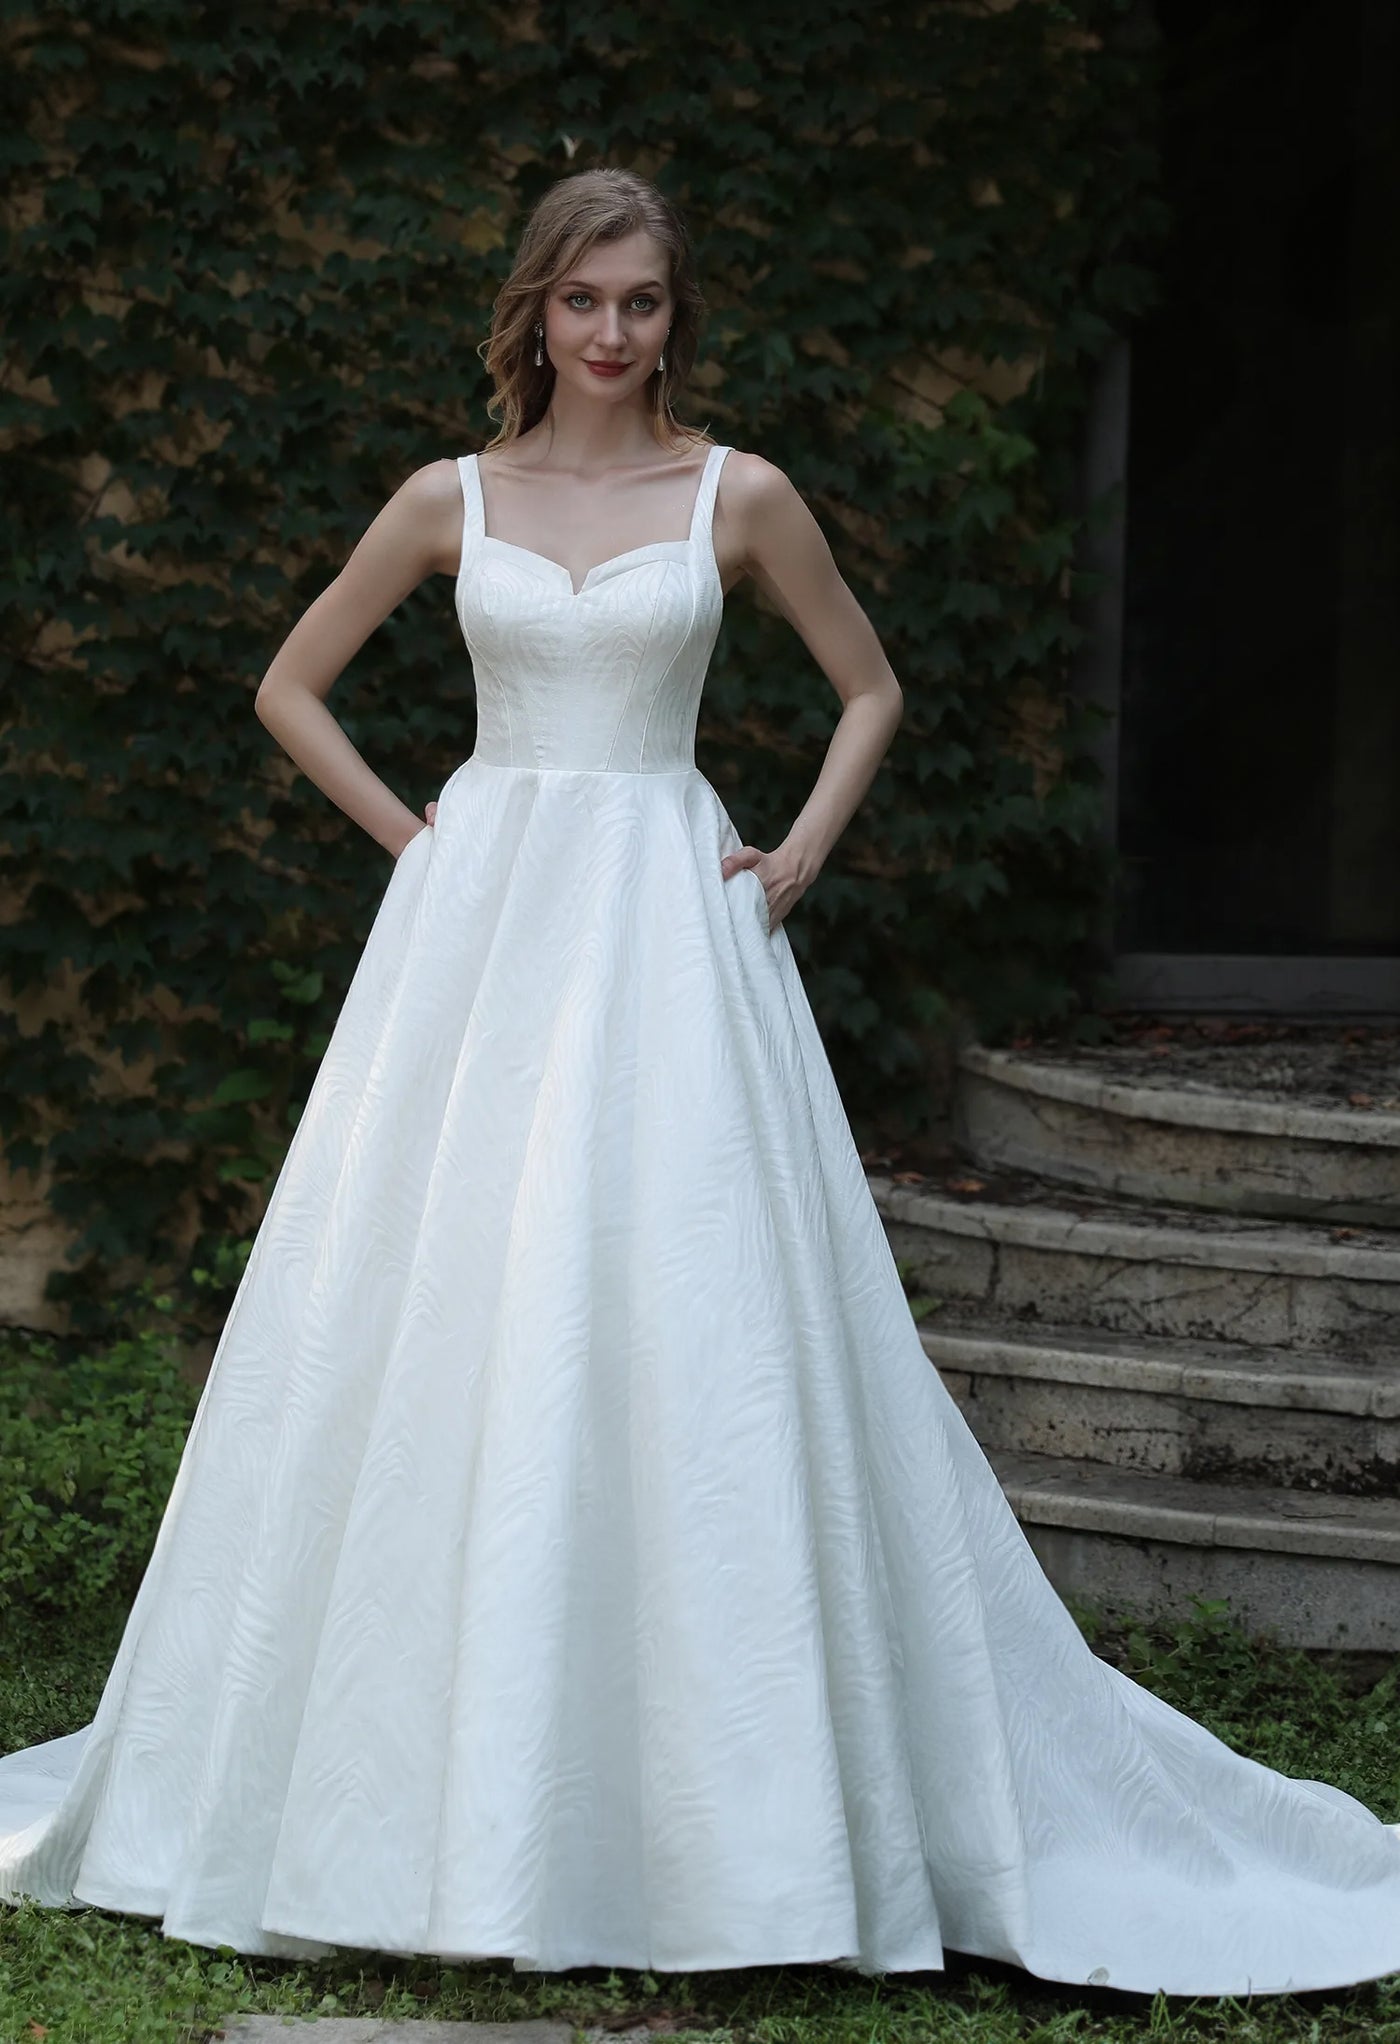 Strapless White Tulle Satin Ball Gown Wedding Dress - Promfy